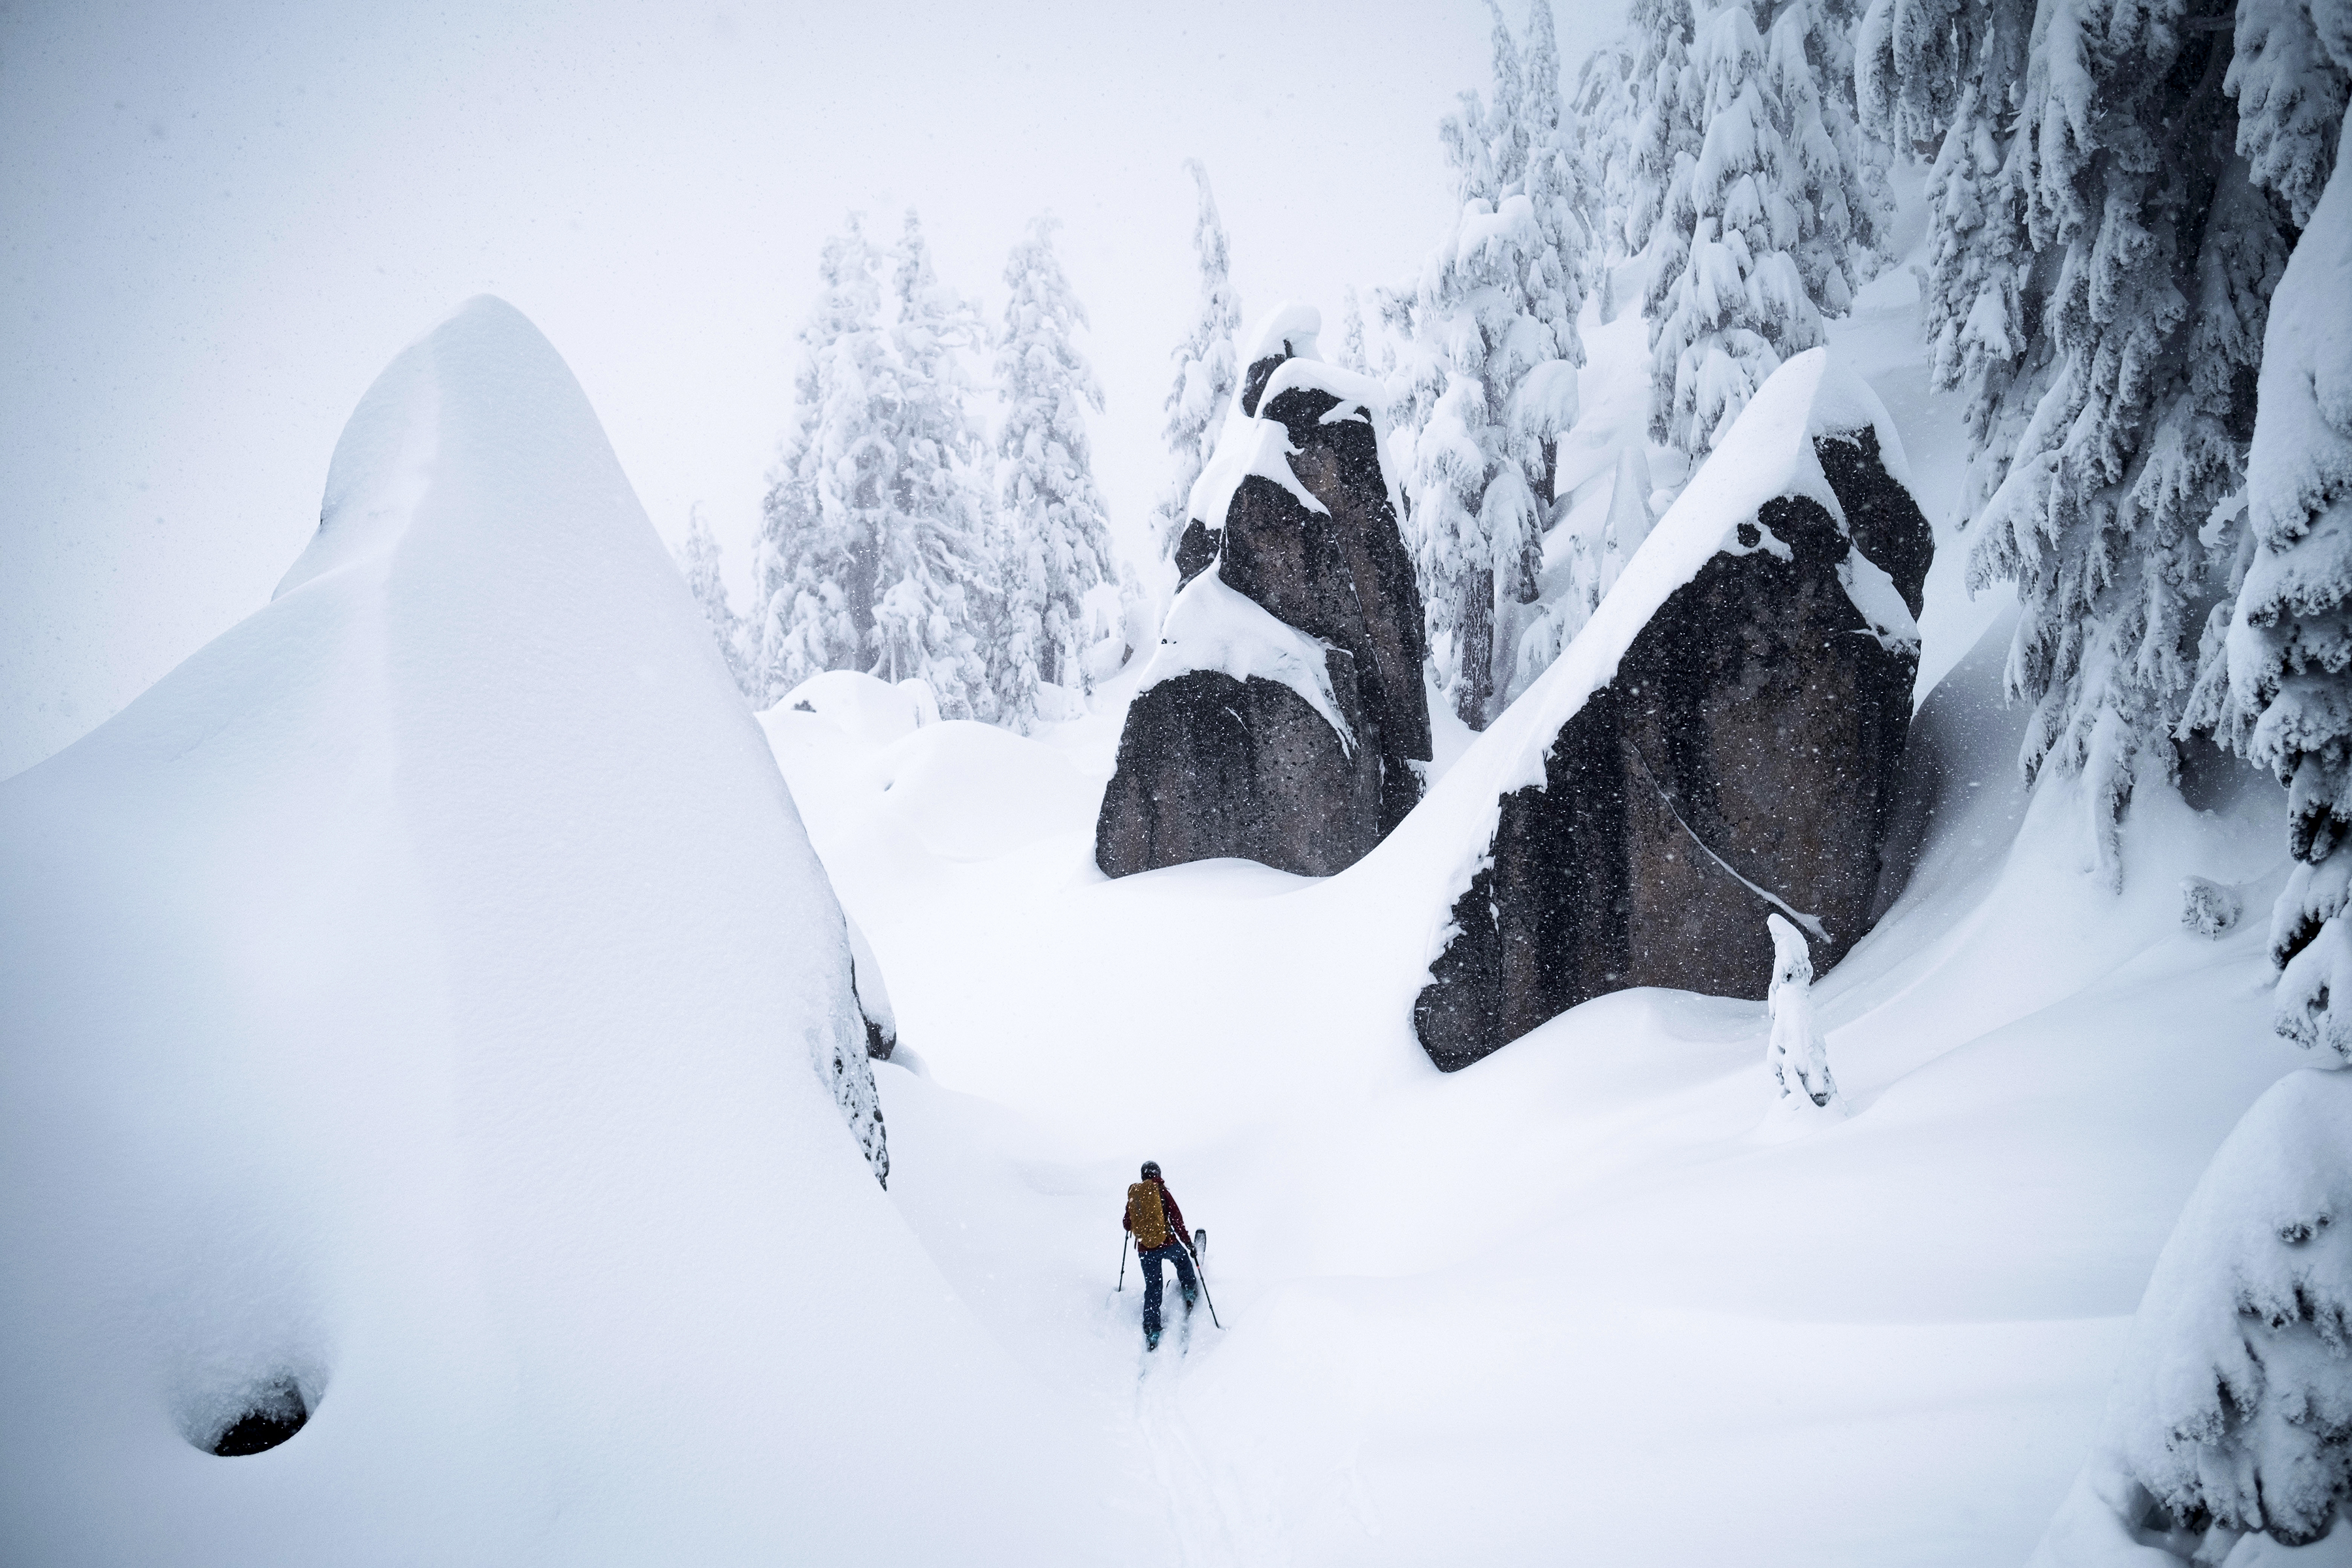 A person climbing a snow-covered mountainside.